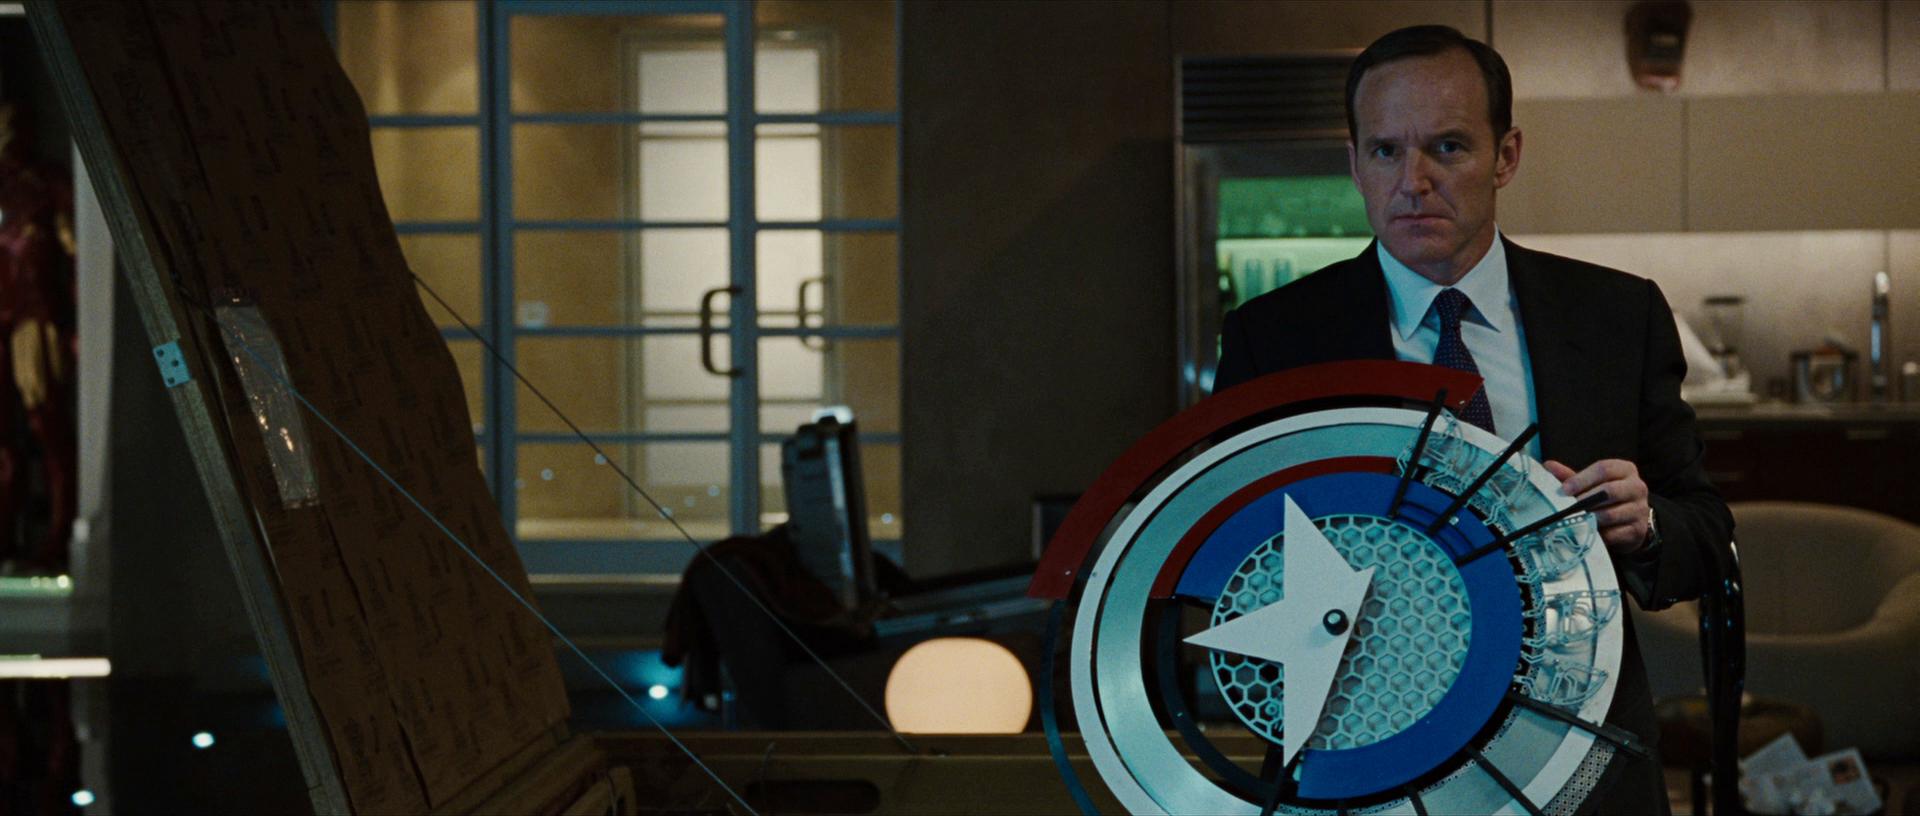 Captain America Shield in Iron Man 2